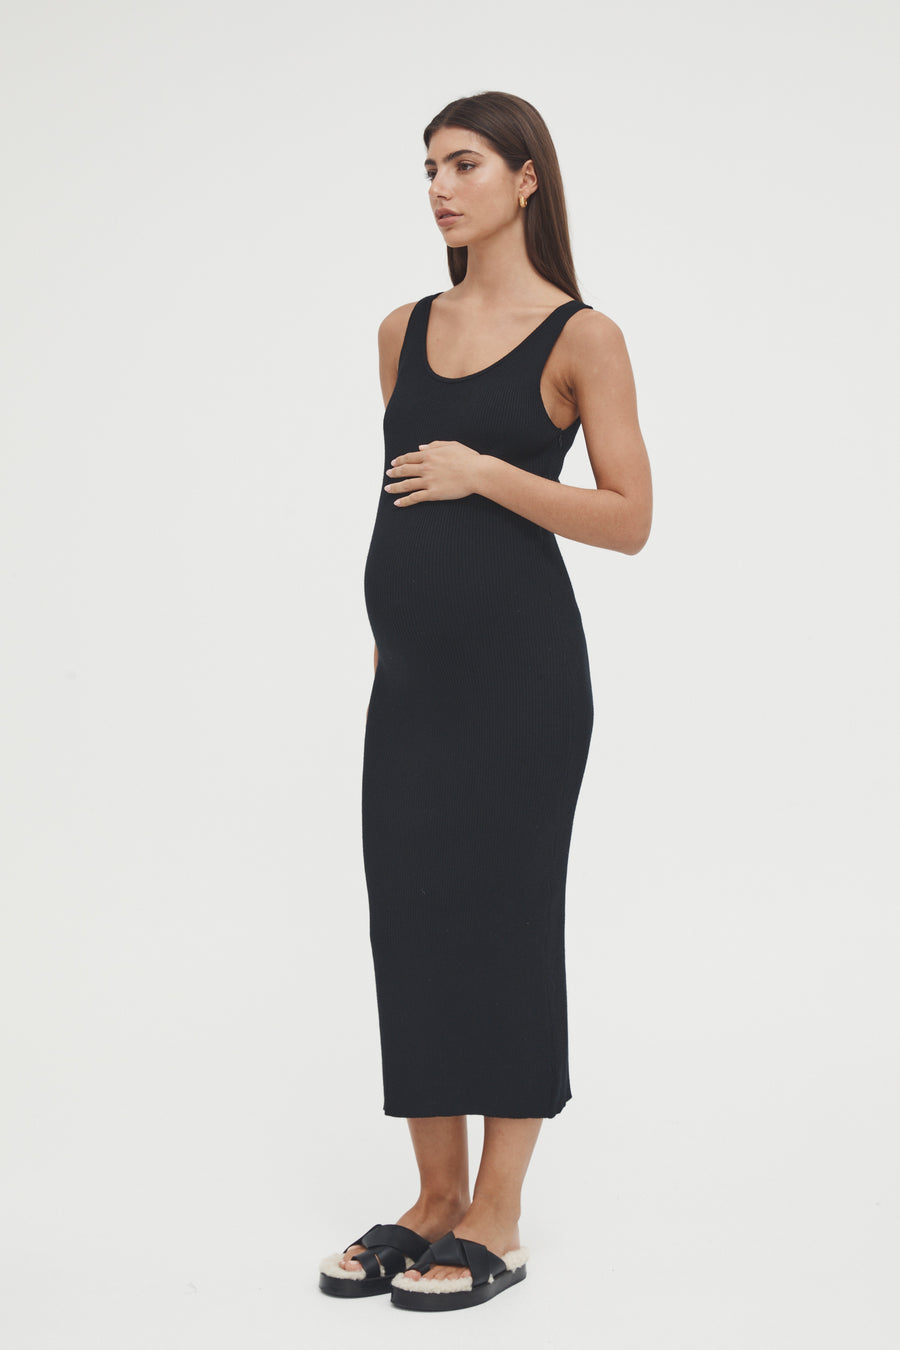 Stretchy Rib Knit Maternity Dress (Black) 2